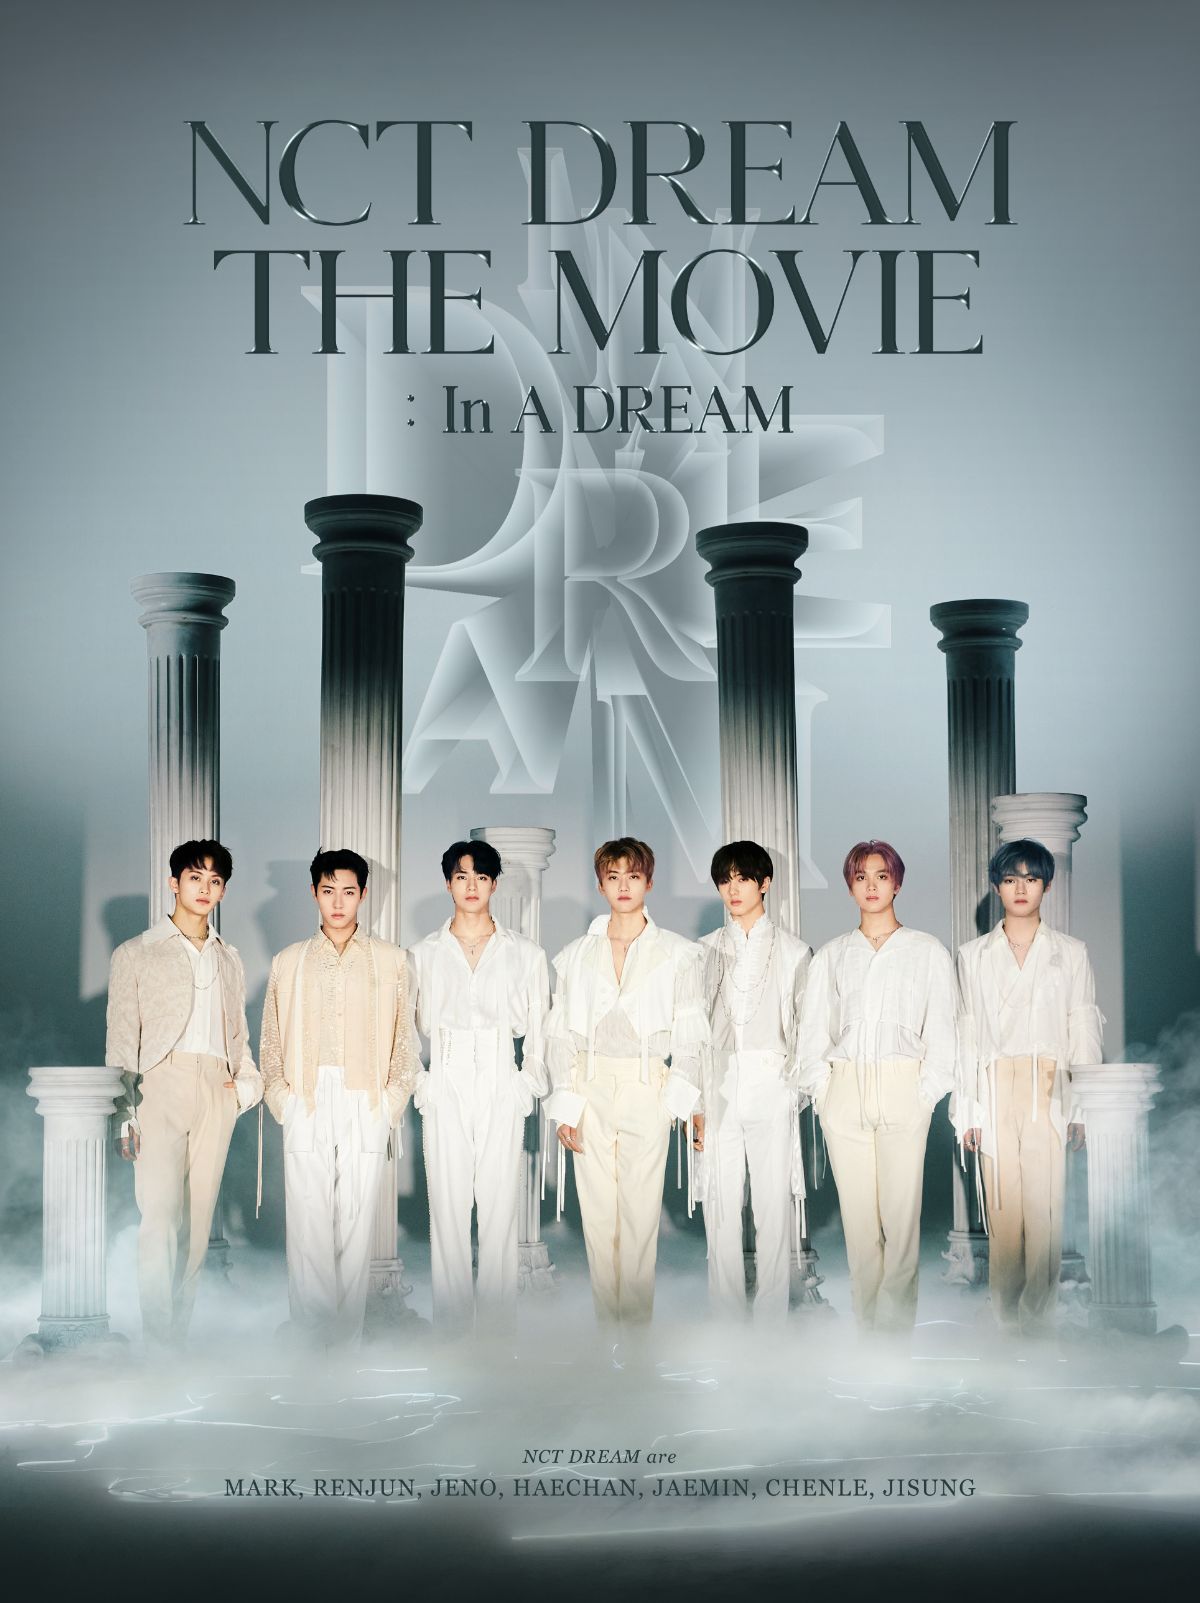 NCT DREAM初の映画「NCT DREAM THE MOVIE : In A DREAM」がLeminoで日本独占配信スタート